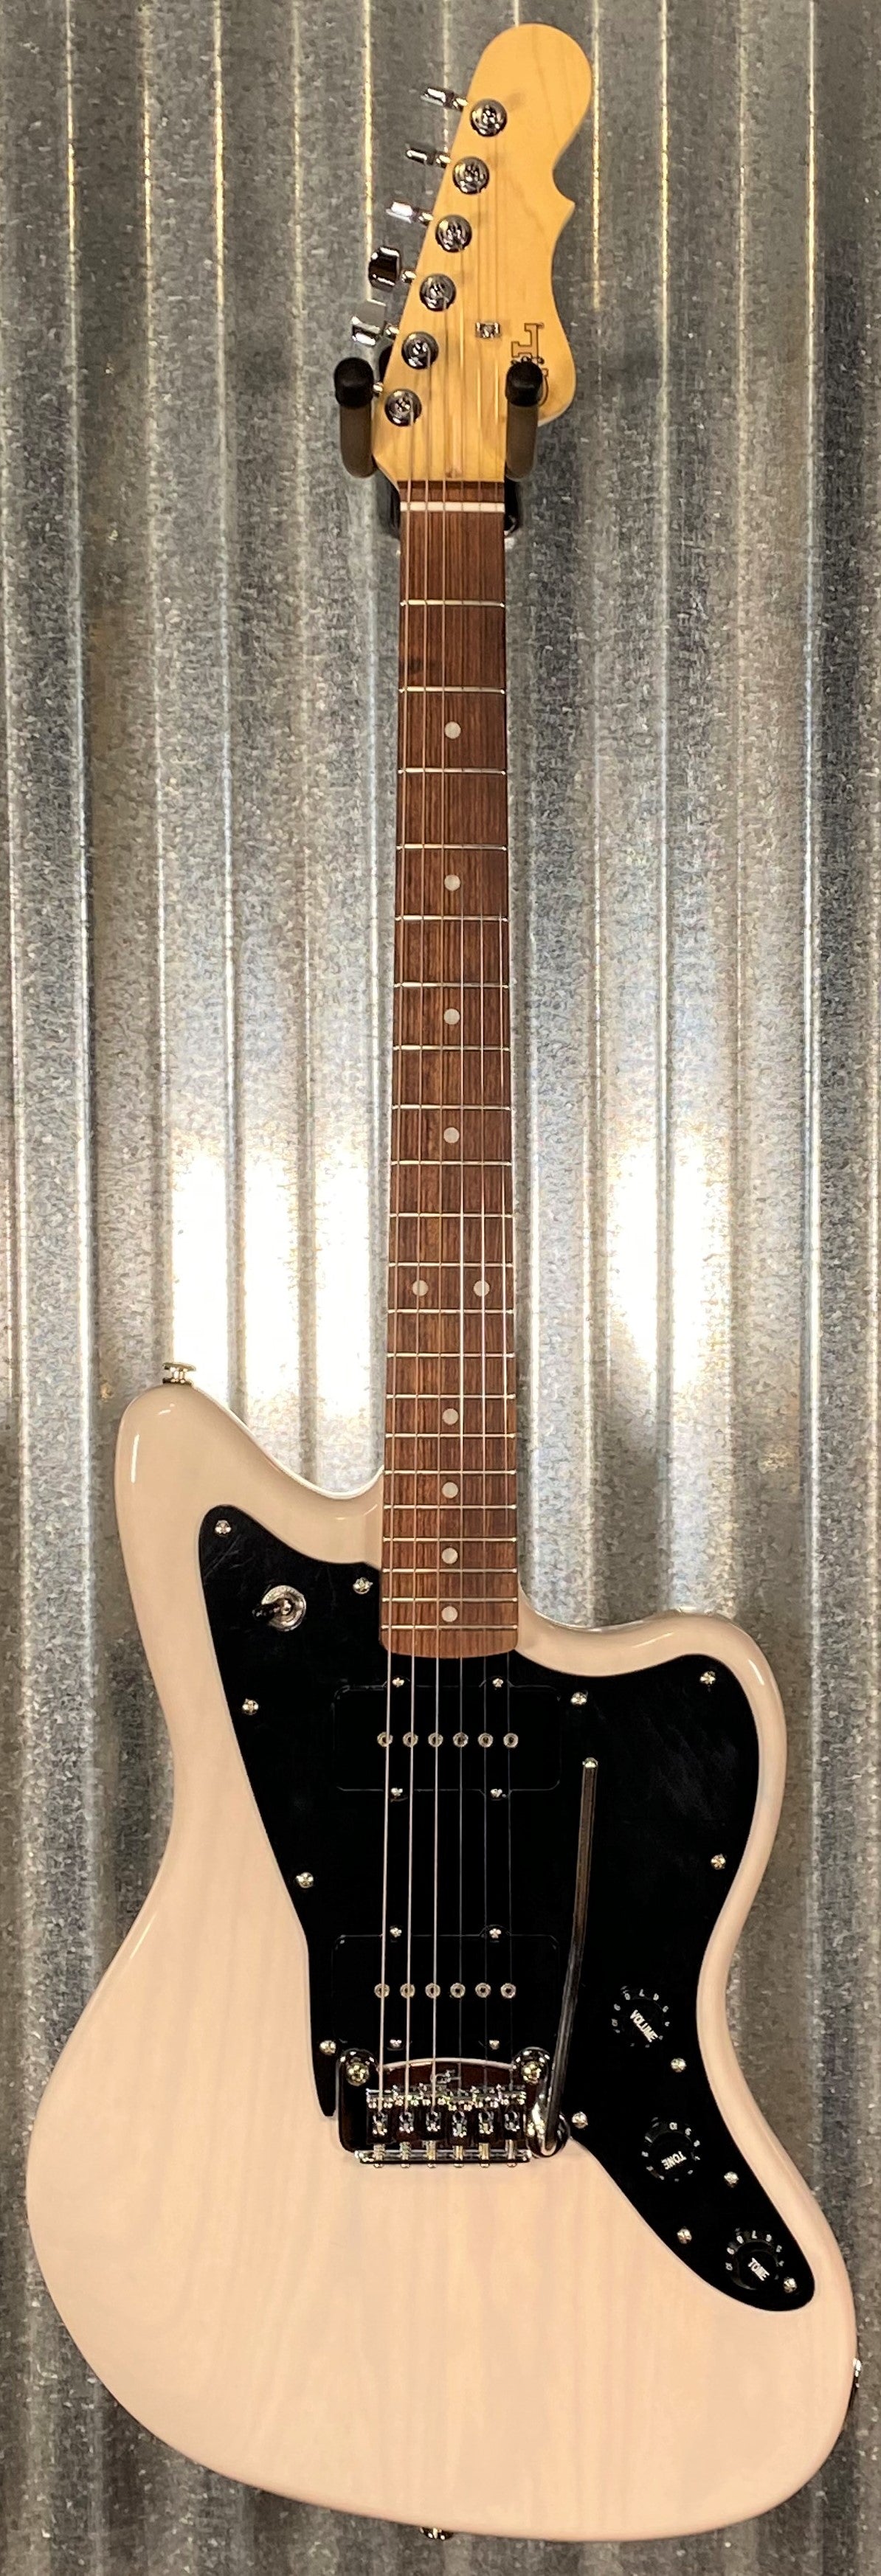 G&L USA Fullerton Deluxe Doheny Blonde Guitar & Bag Blem #0229